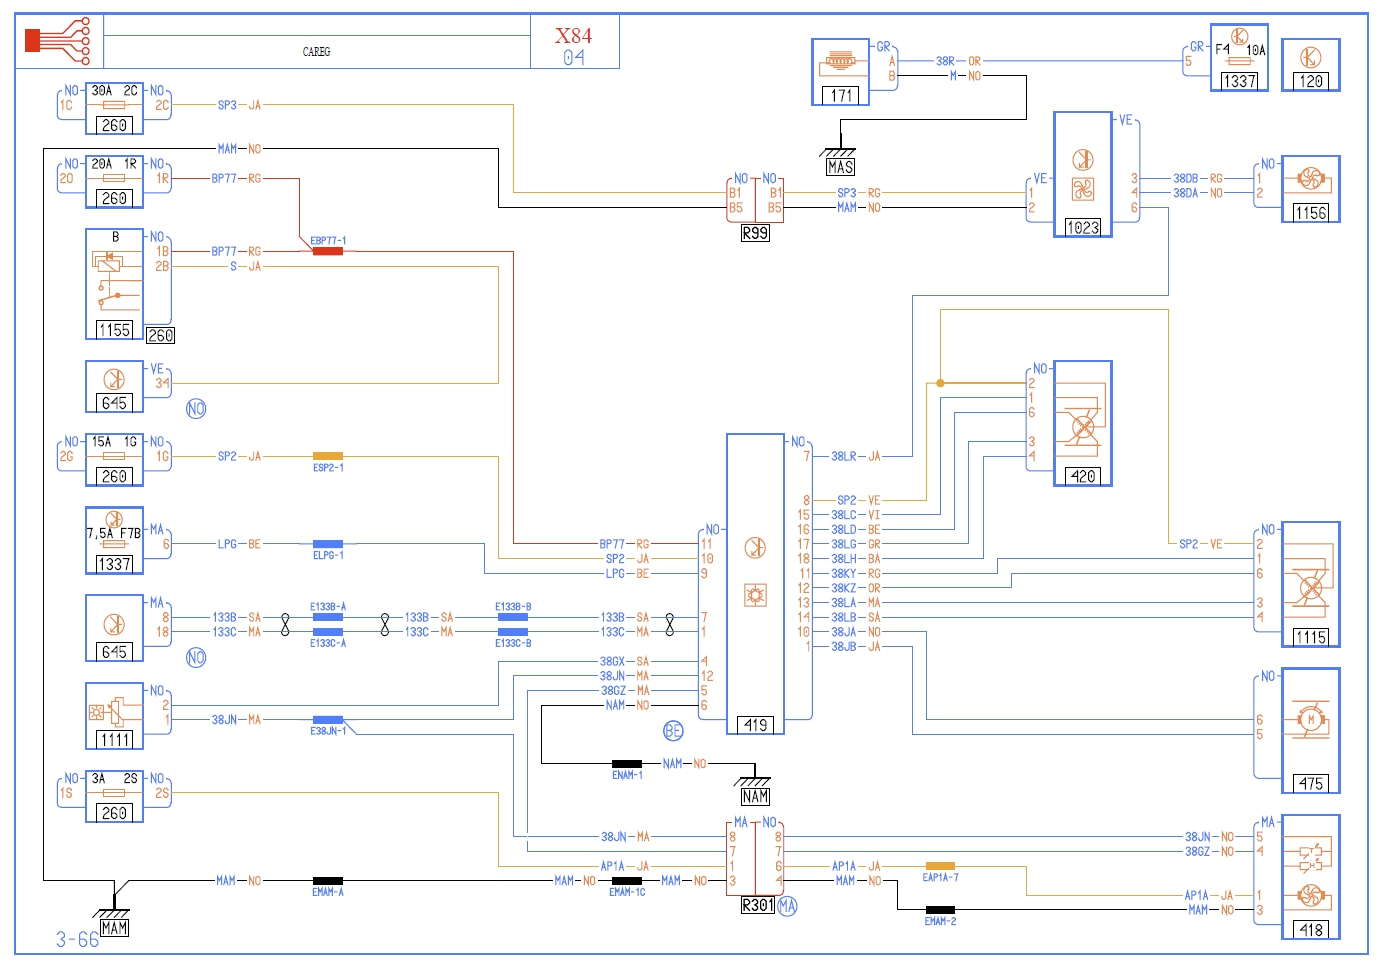 renault laguna fuse box diagram today wiring diagramrenault megane under bonnet fuse box diagram wiring diagram